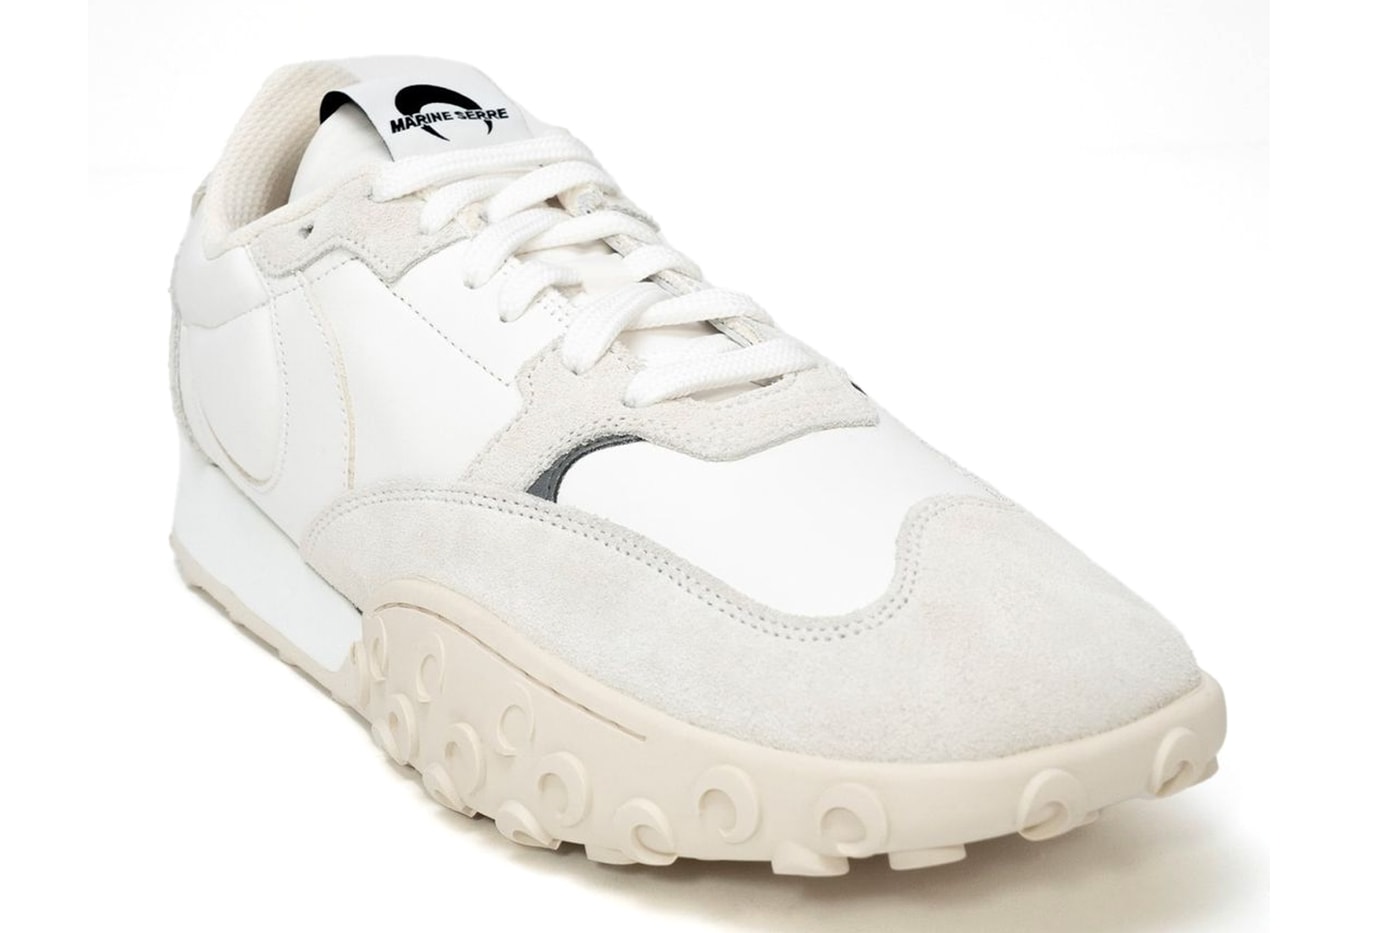 marine serre sneakers black white shoes moon trainer